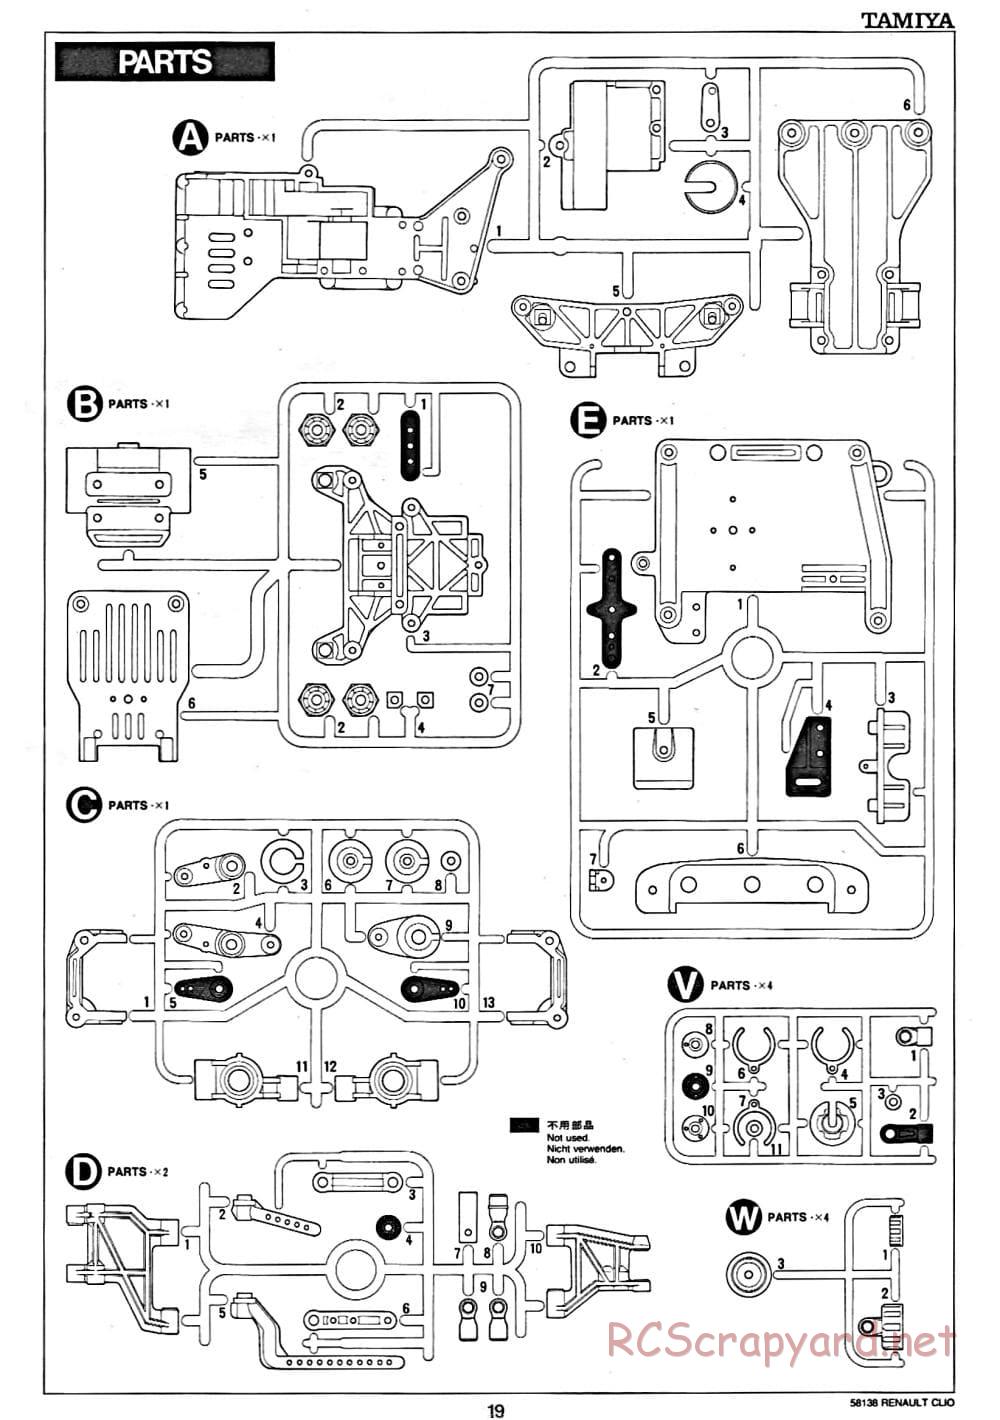 Tamiya - Renault Clio Williams Chassis - Manual - Page 20